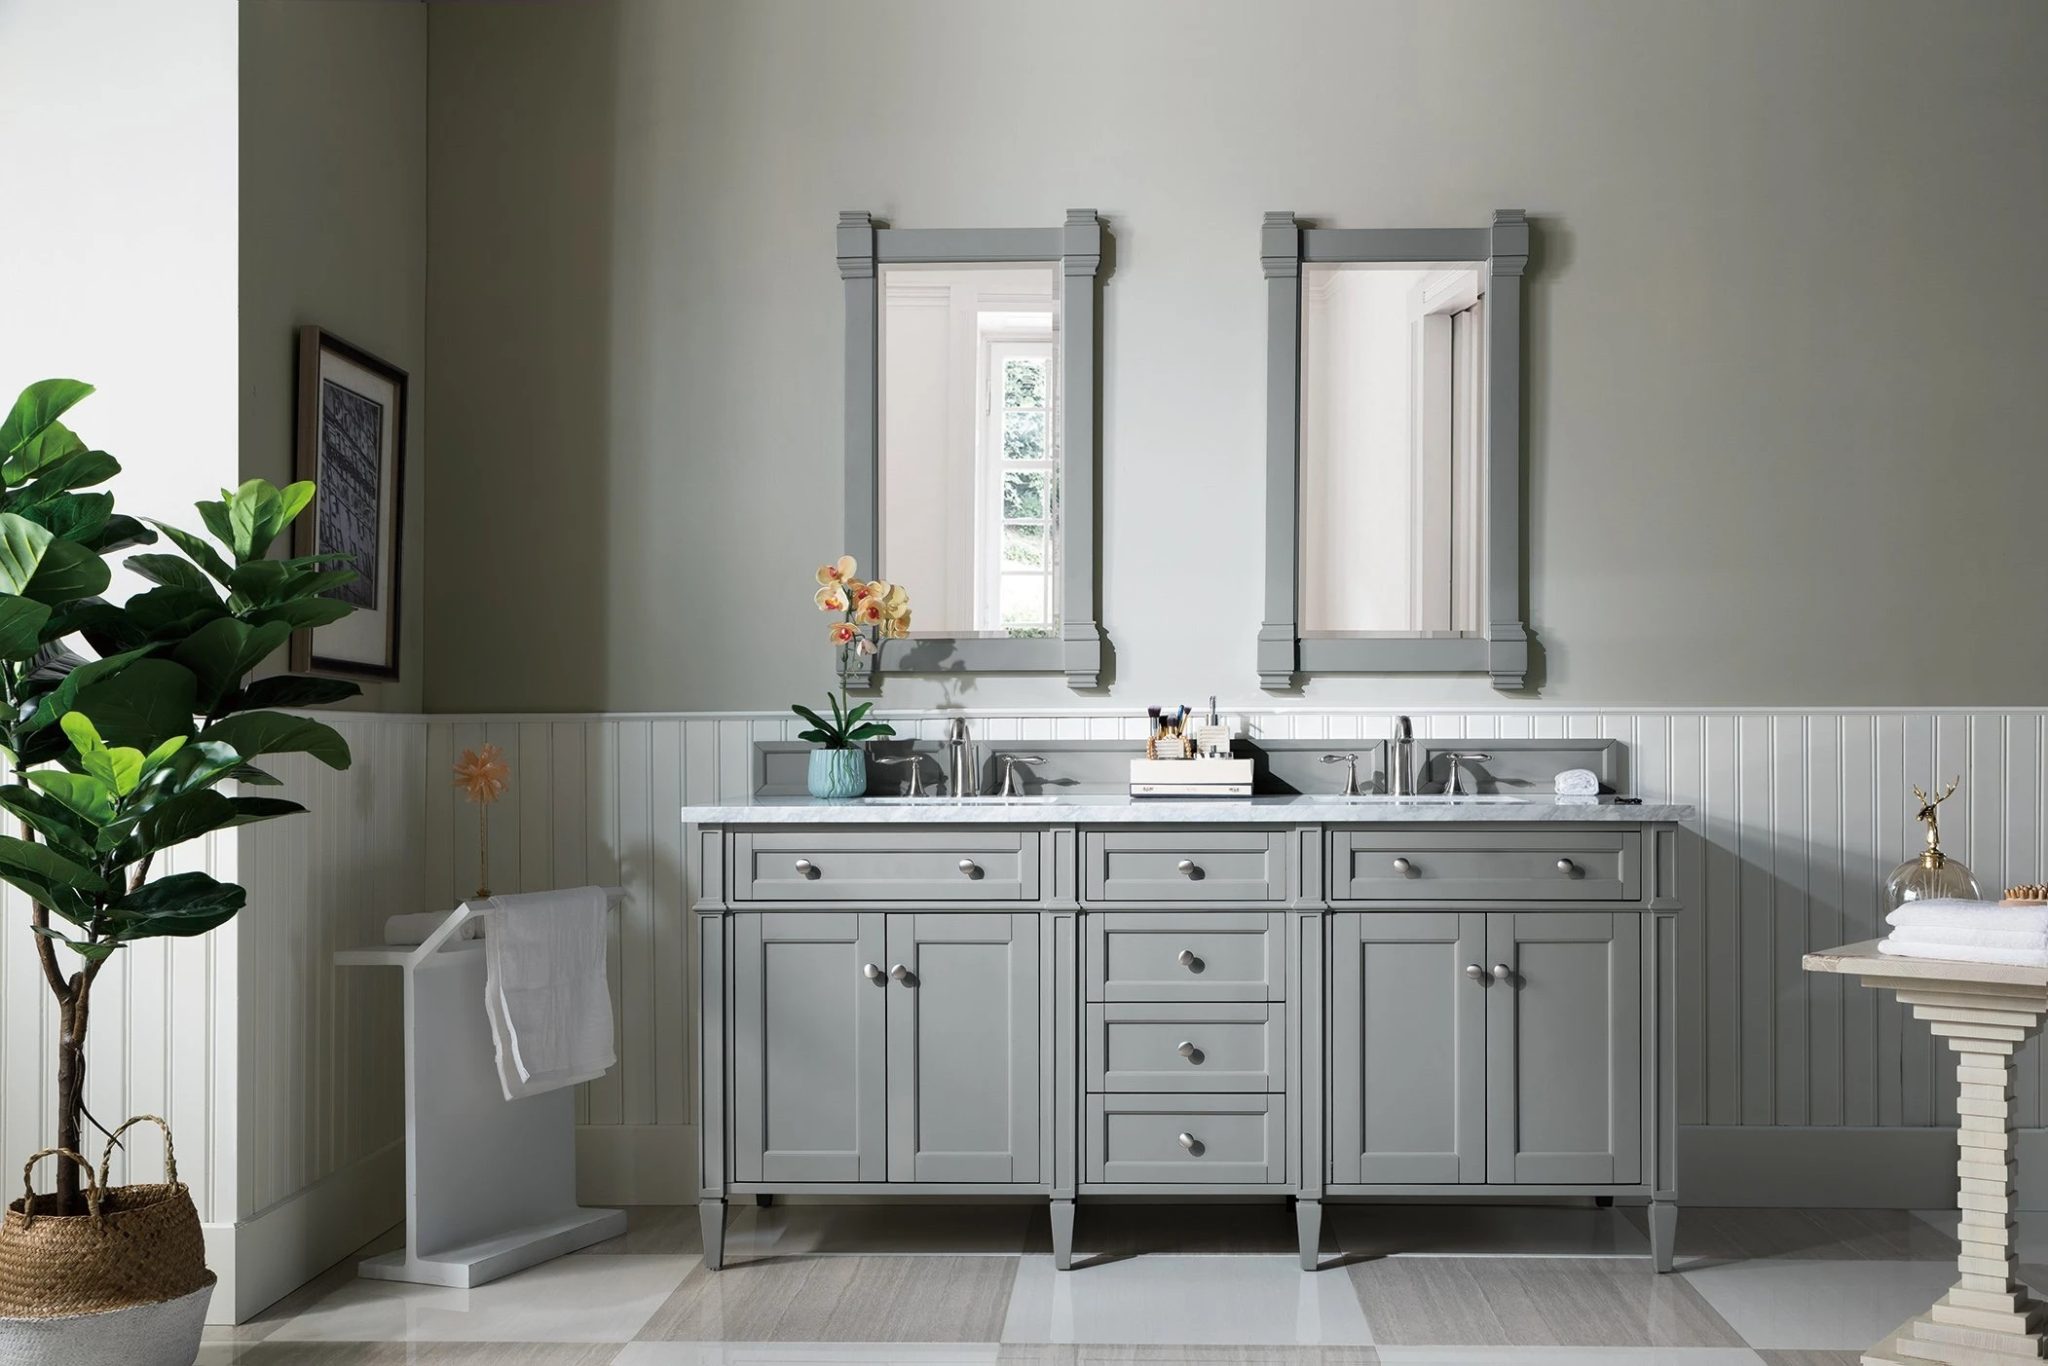 Gray Bathroom Vanity Mirrors